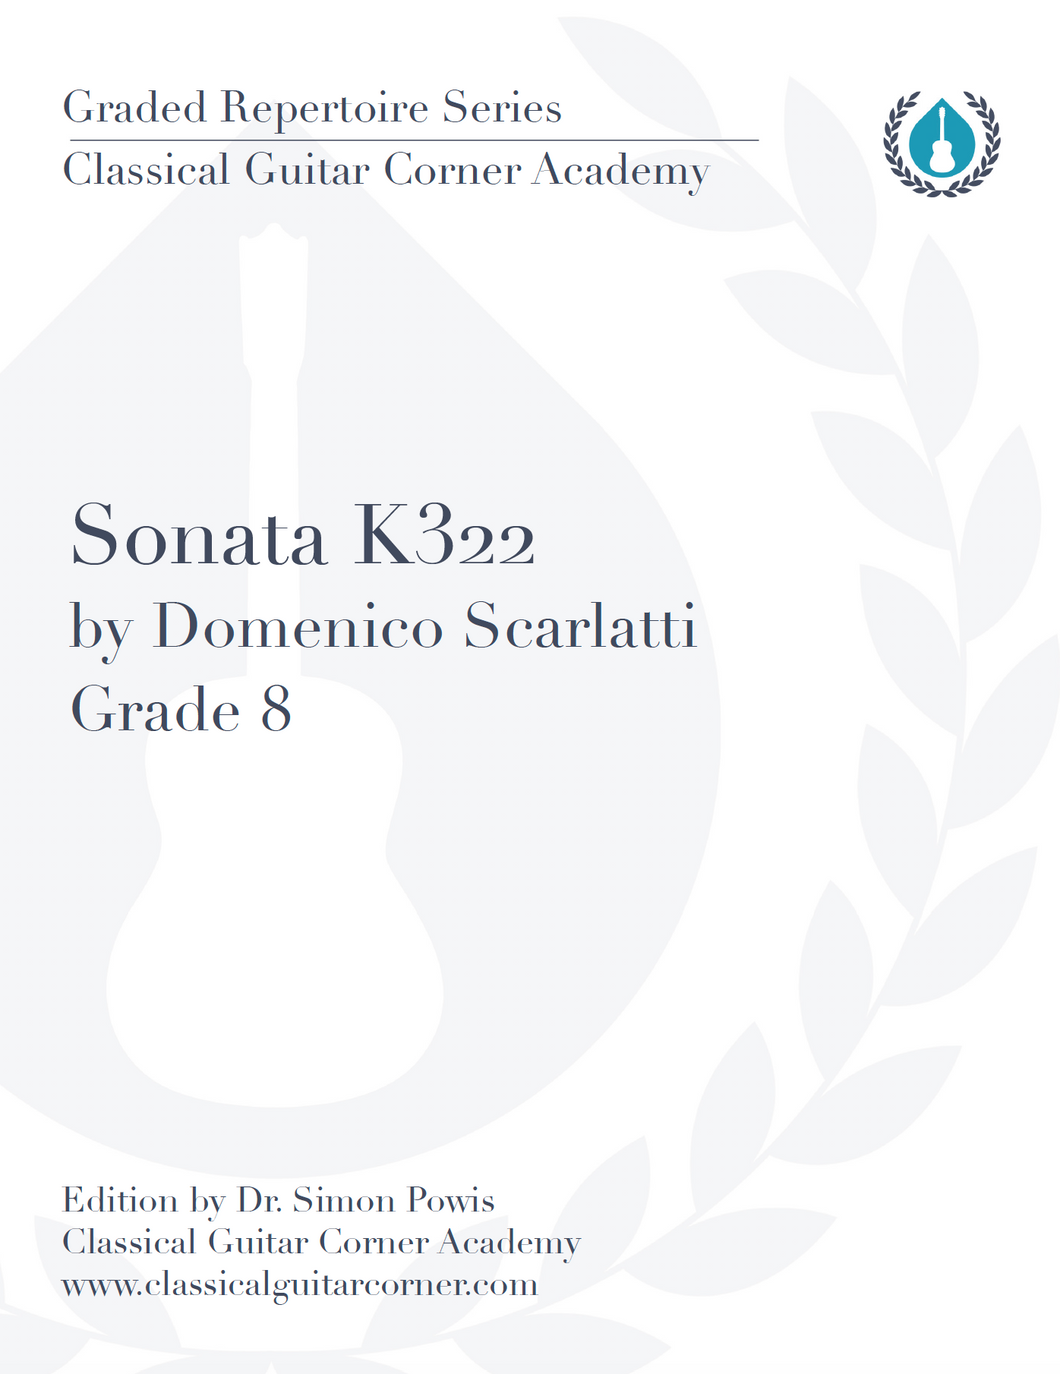 Sonata K322 by Domenico Scarlatti TAB